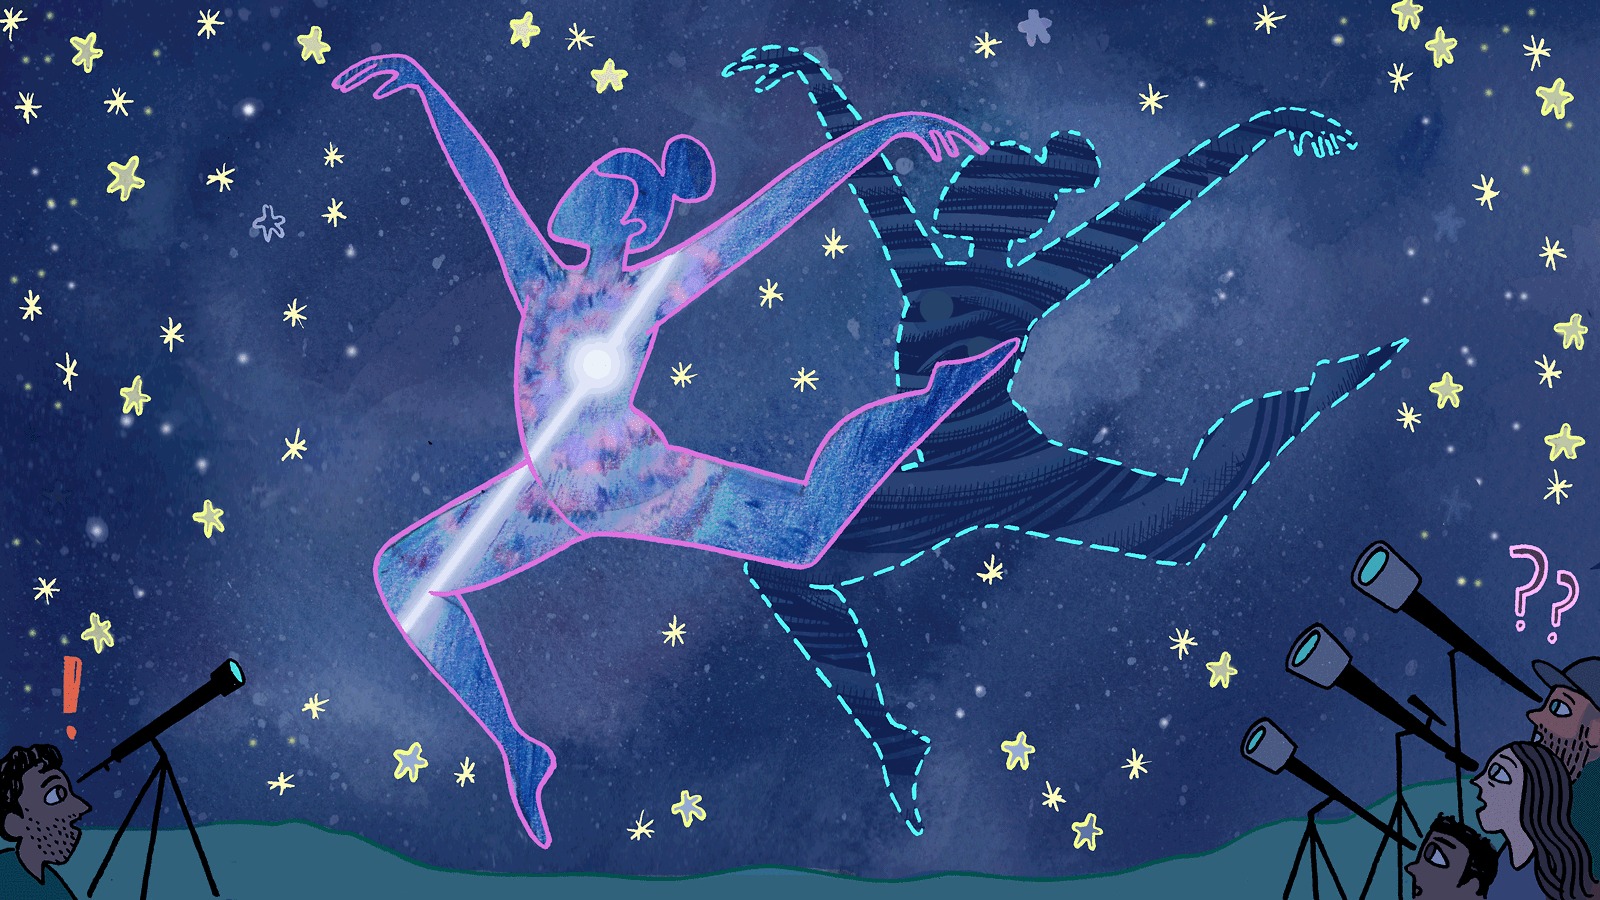 Two women dancing in space